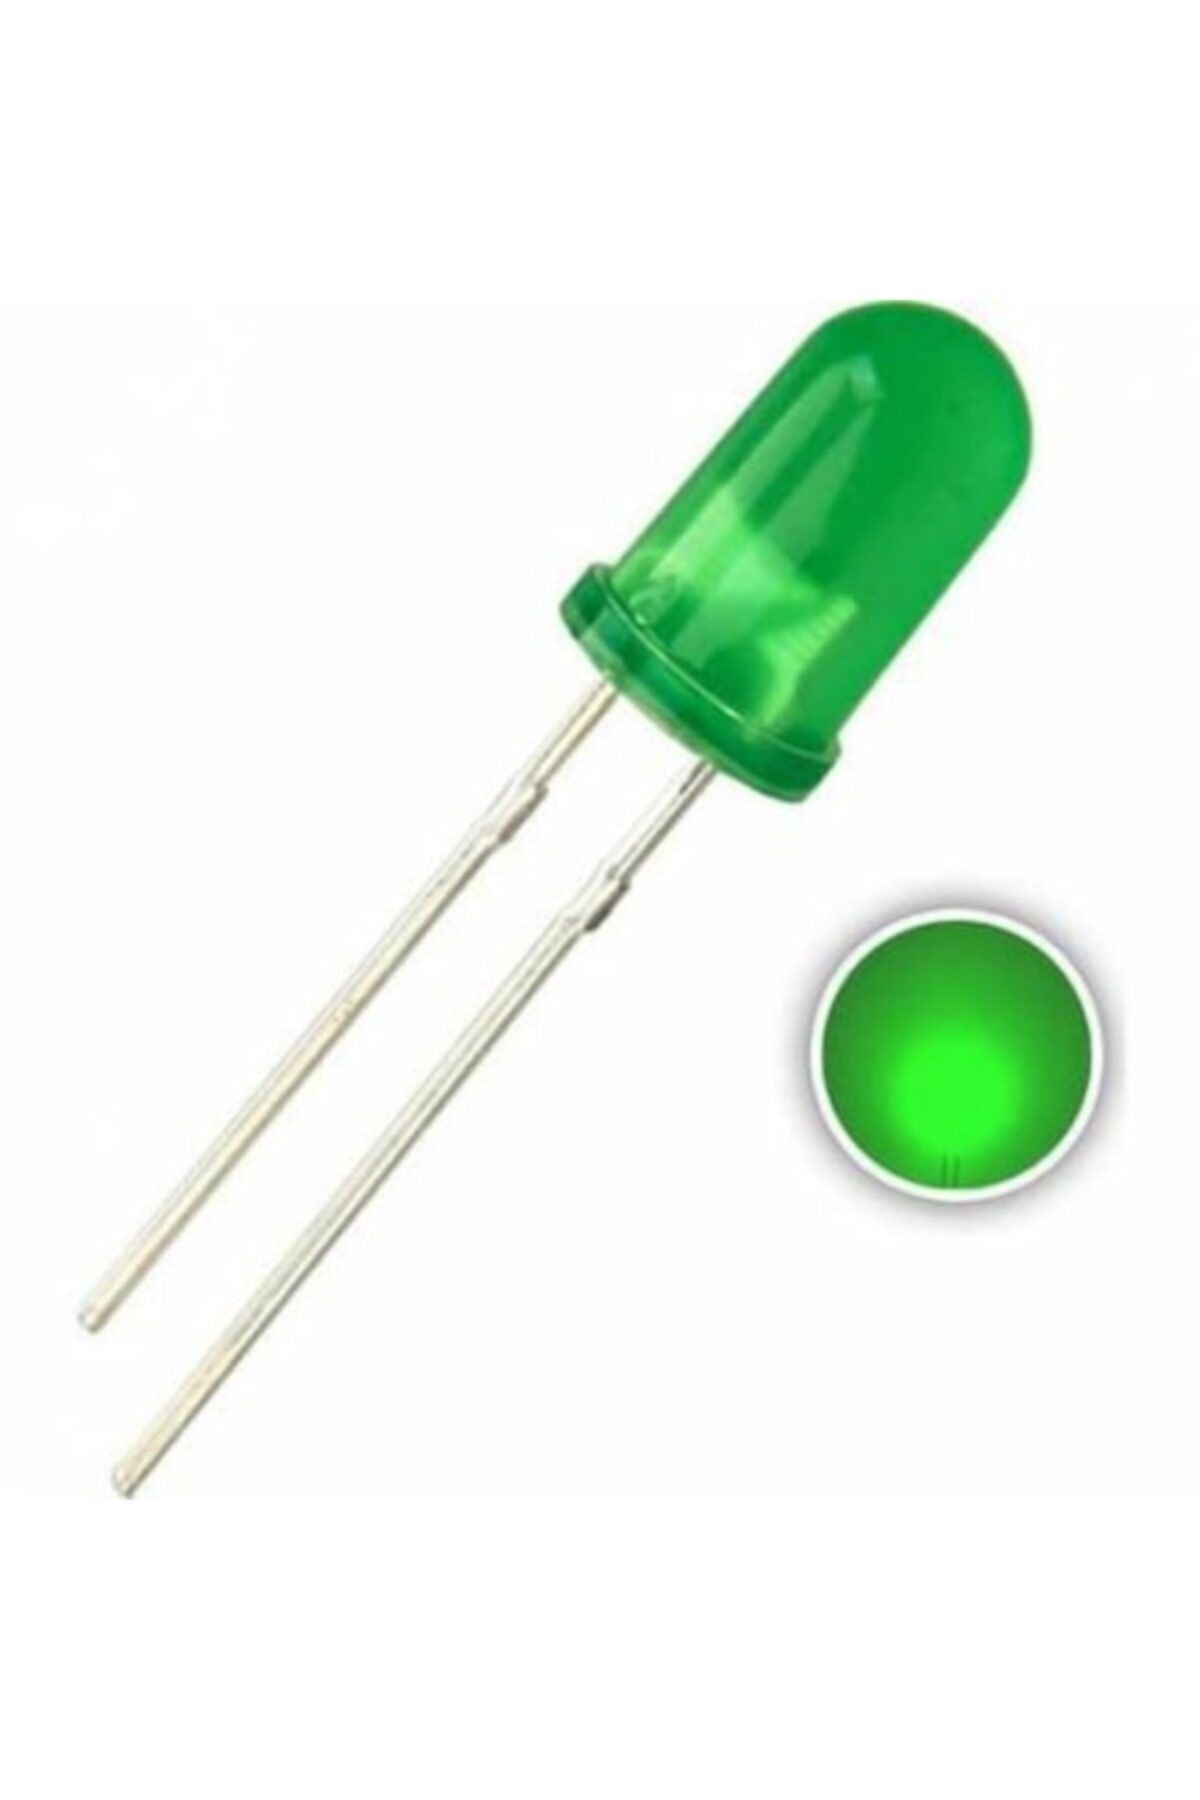 Emay 10 Adet - 5mm Diffused Led - Yeşil(green) - Arduino, Deney